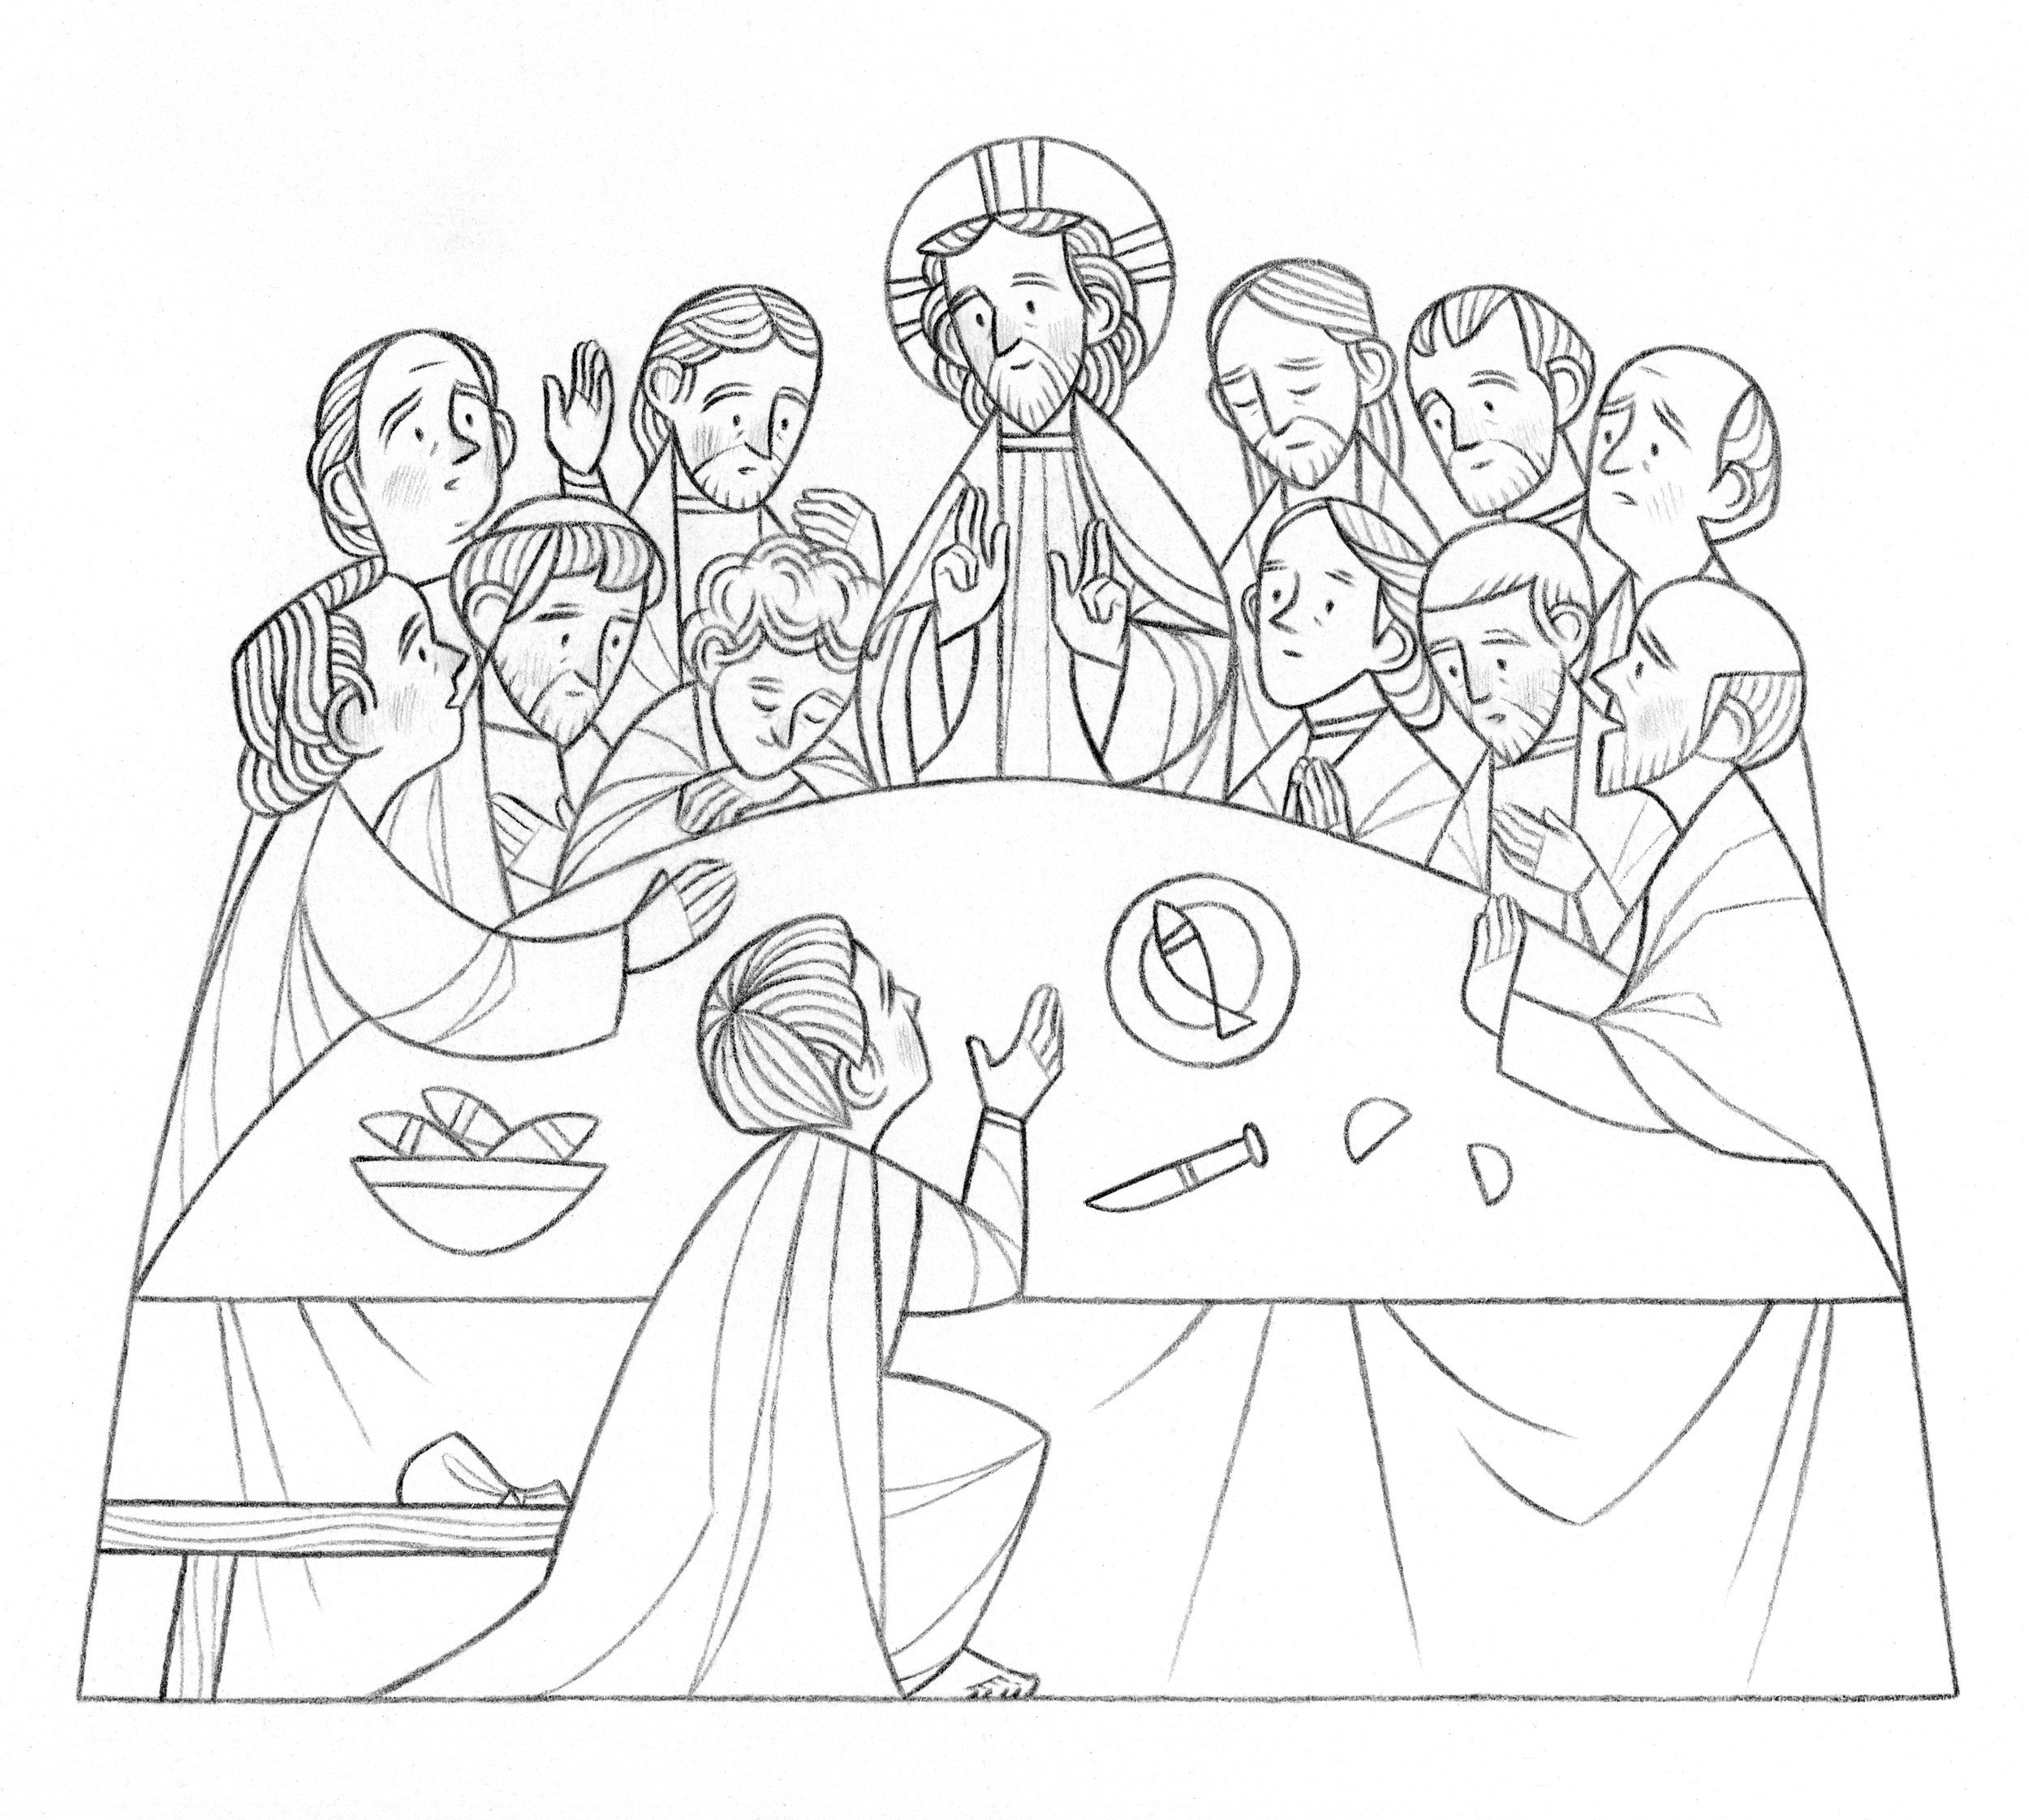 01_AY-PE_Bath Abbey_Bath Old English Gospels Interactive_The Last Supper Illustration_02.jpg